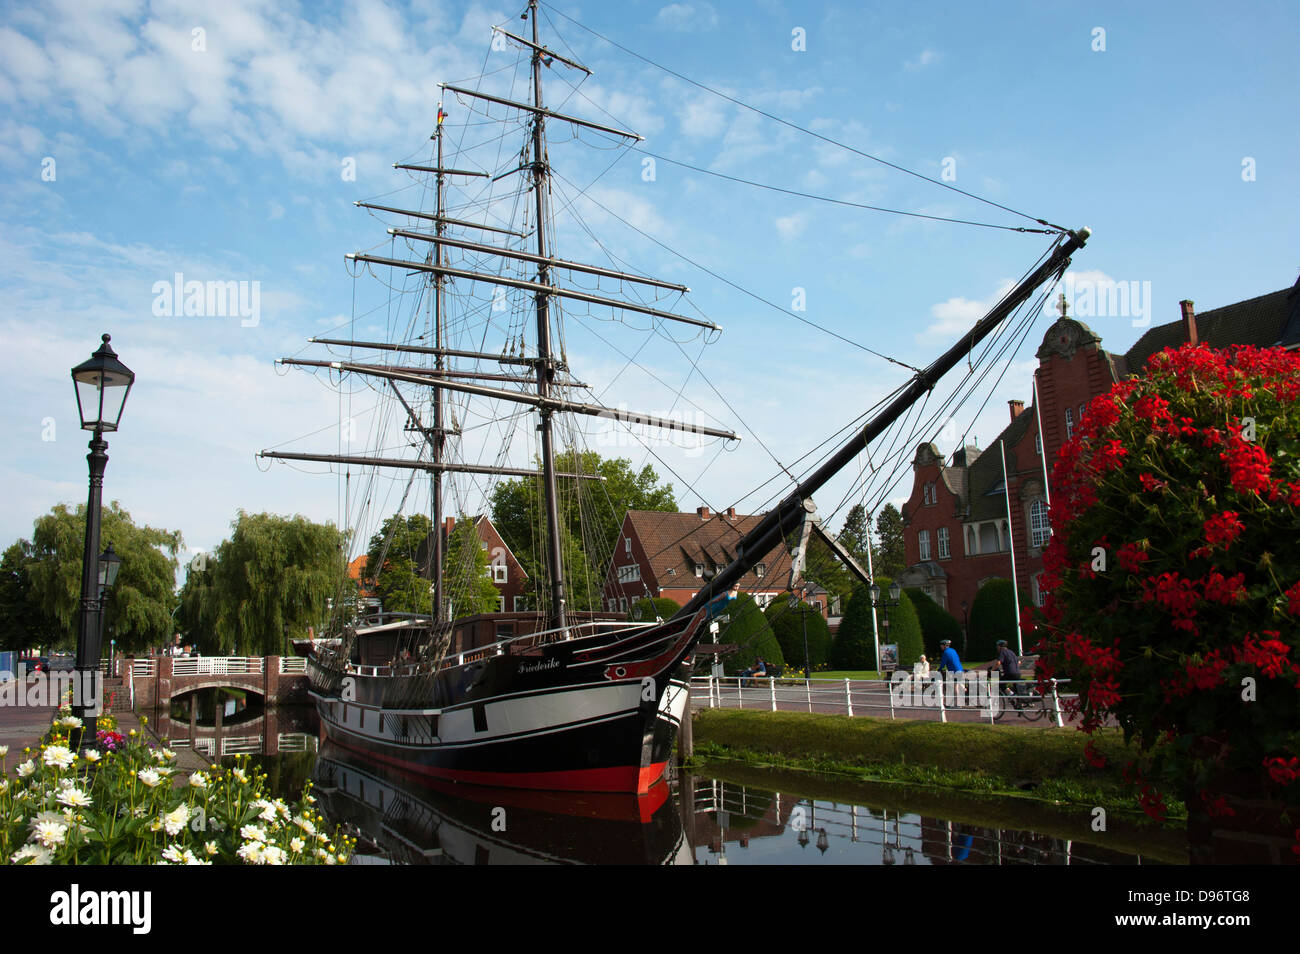 Museum Ship Friederike sur canal, Papenburg, Basse-Saxe, Allemagne , Museumsschiff Friederike auf Kanal, Papenburg, Allemagne Banque D'Images